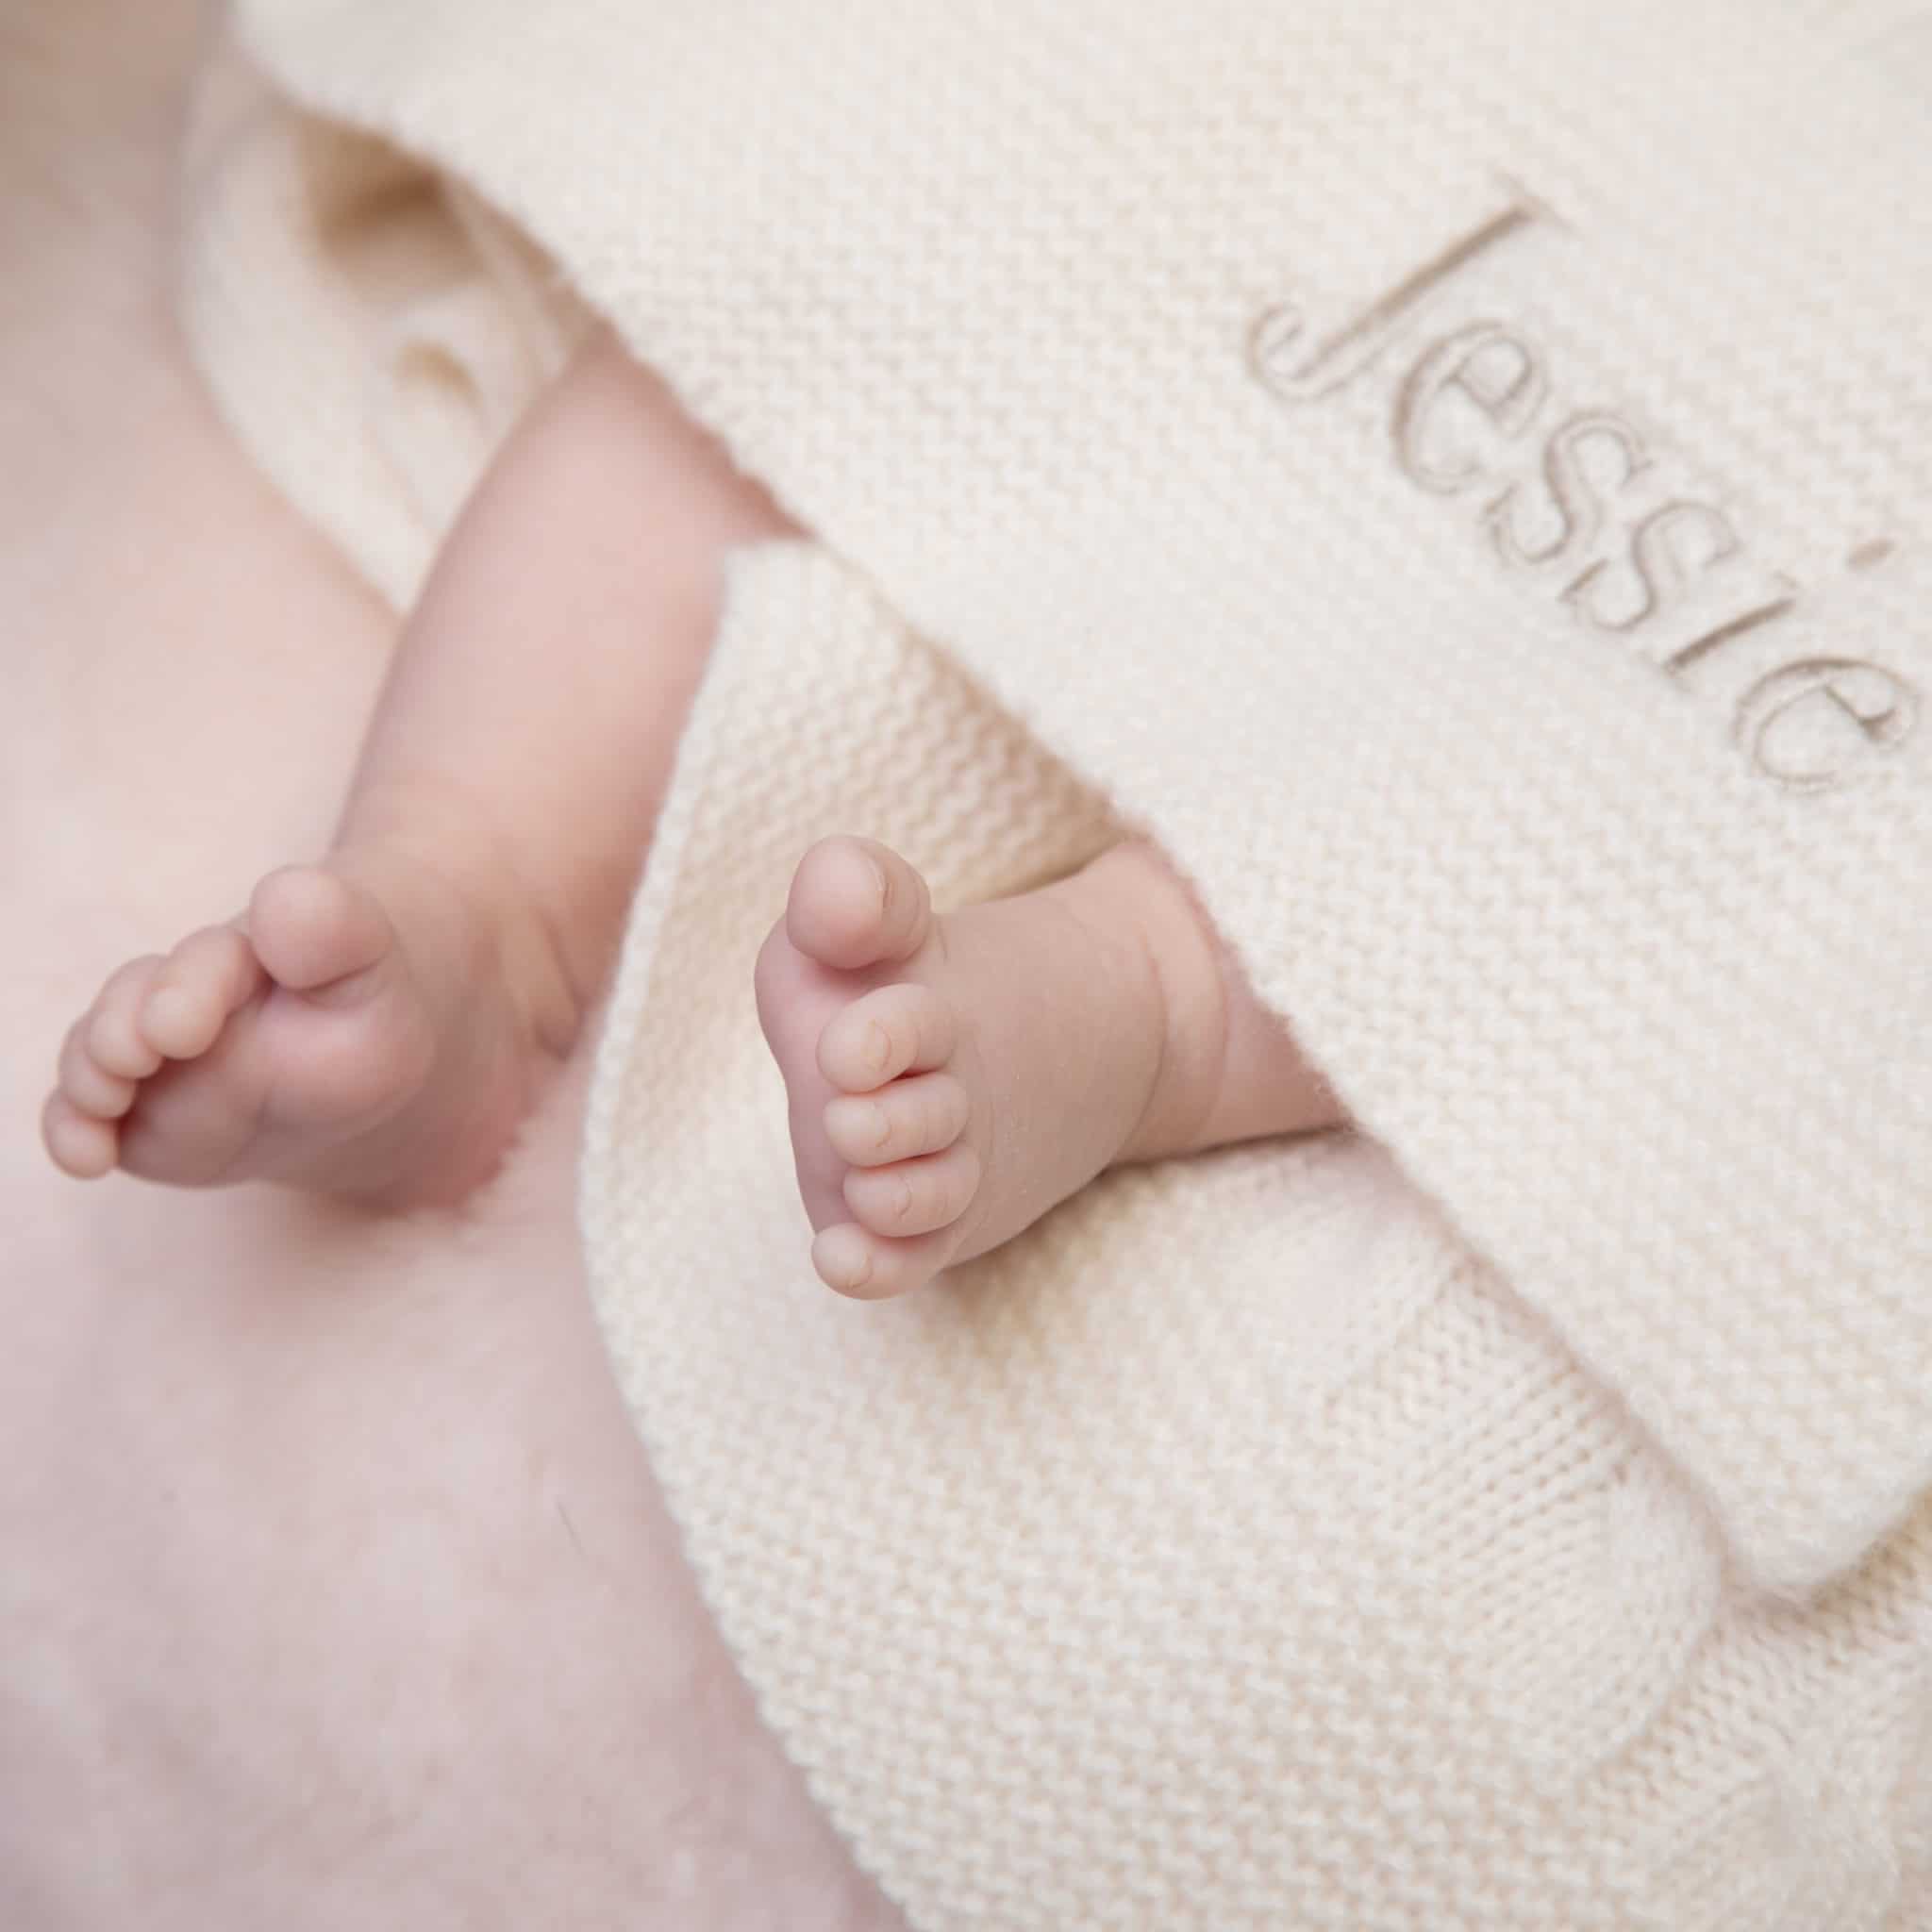 Babys feet wrapped in Personalised blanket